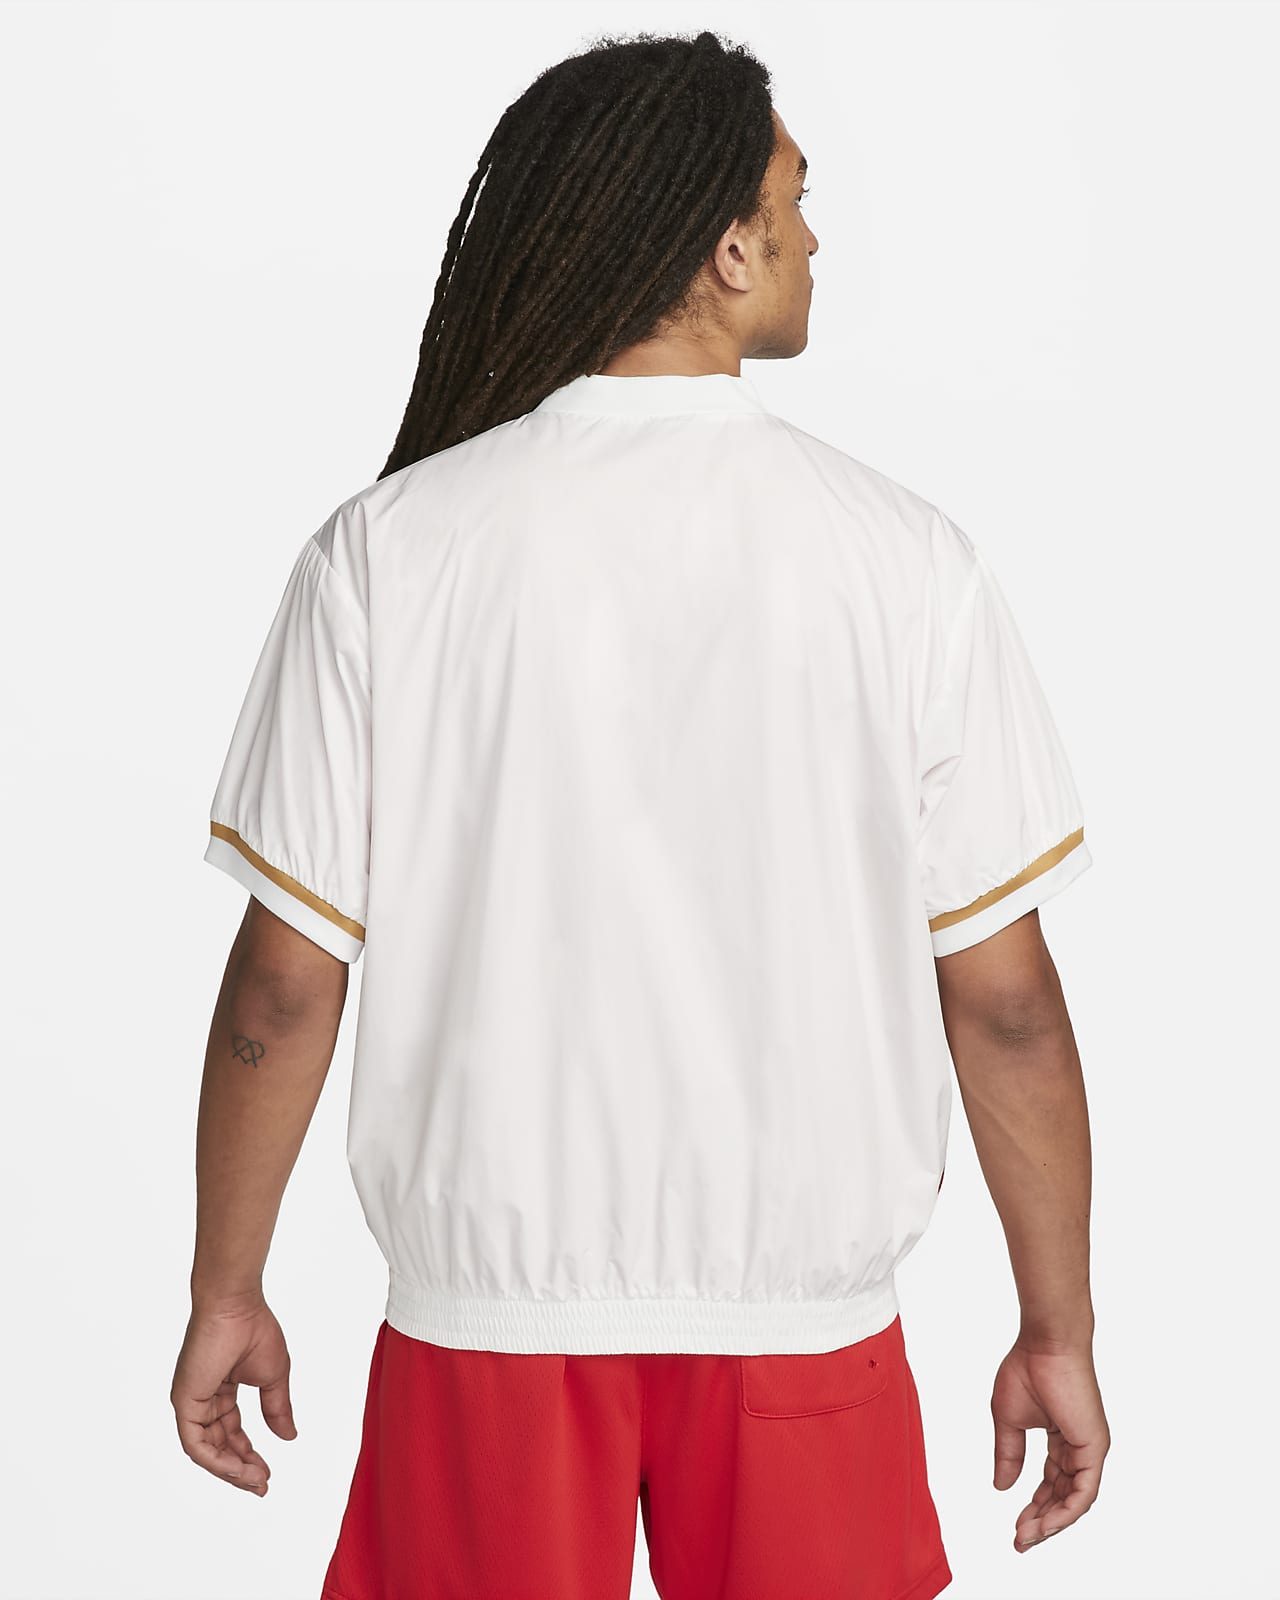 Nike Authentics Men's Warm-Up Shirt. Nike.com